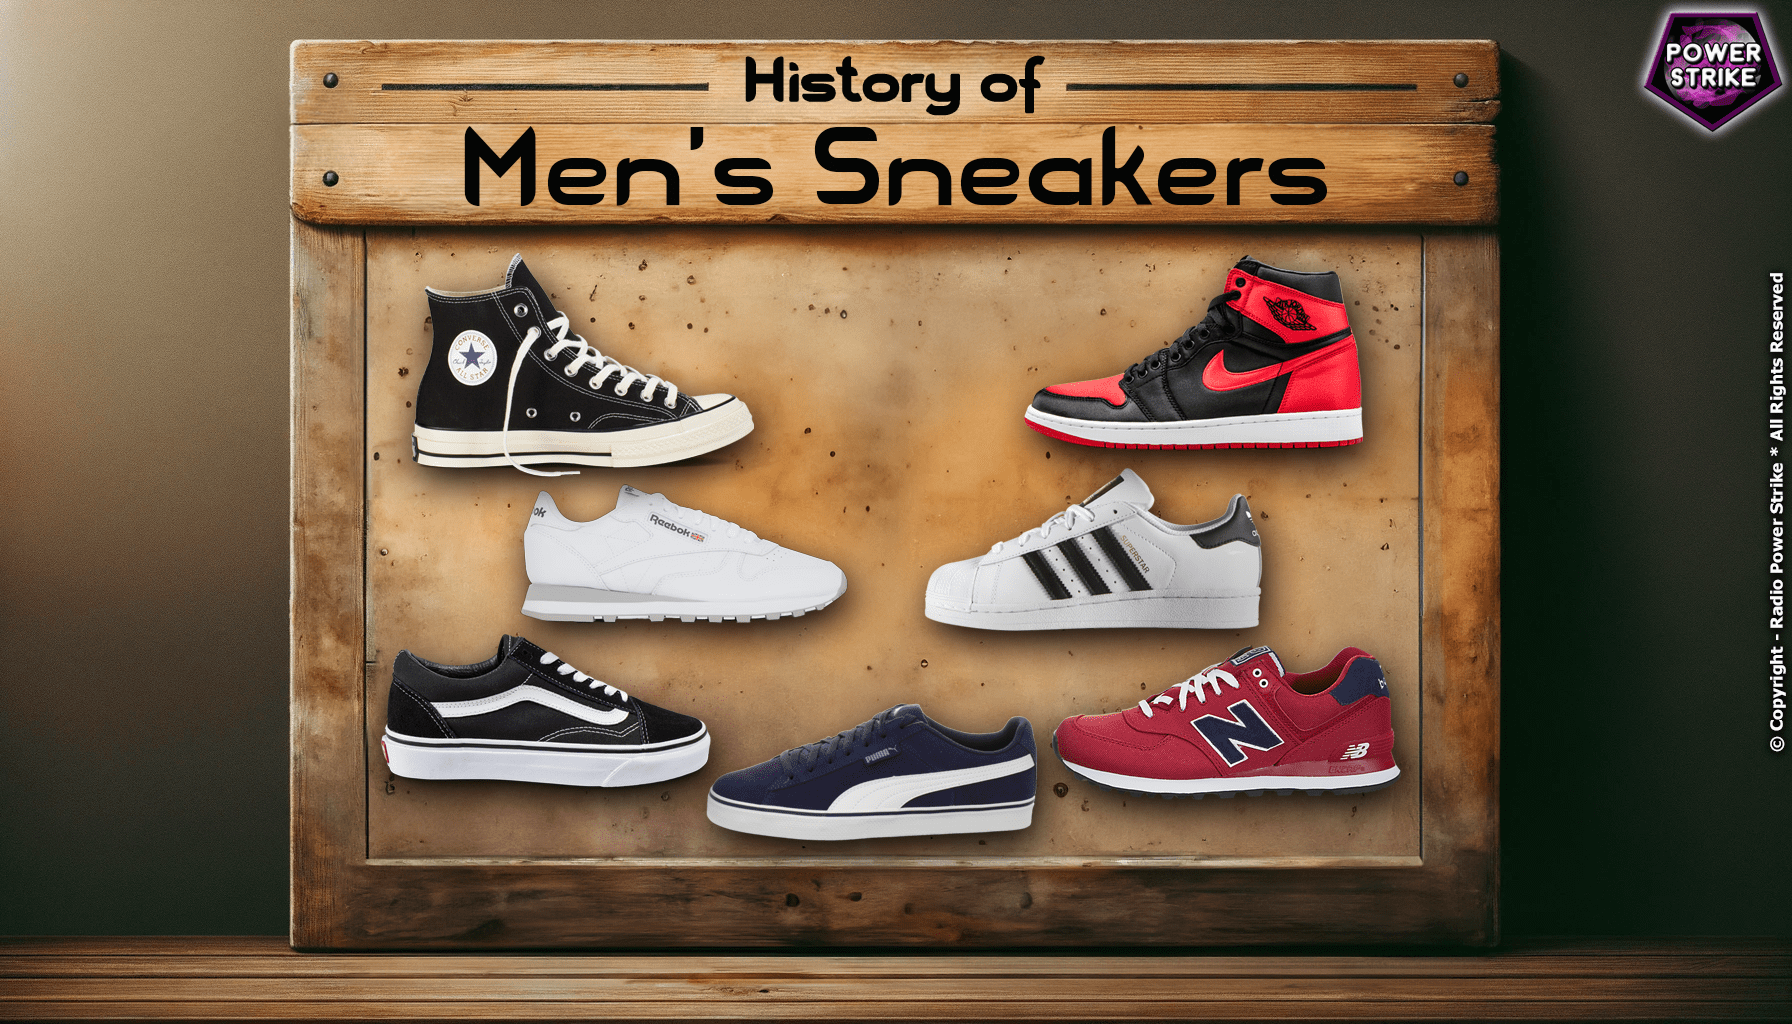 History of Men's Sneakers